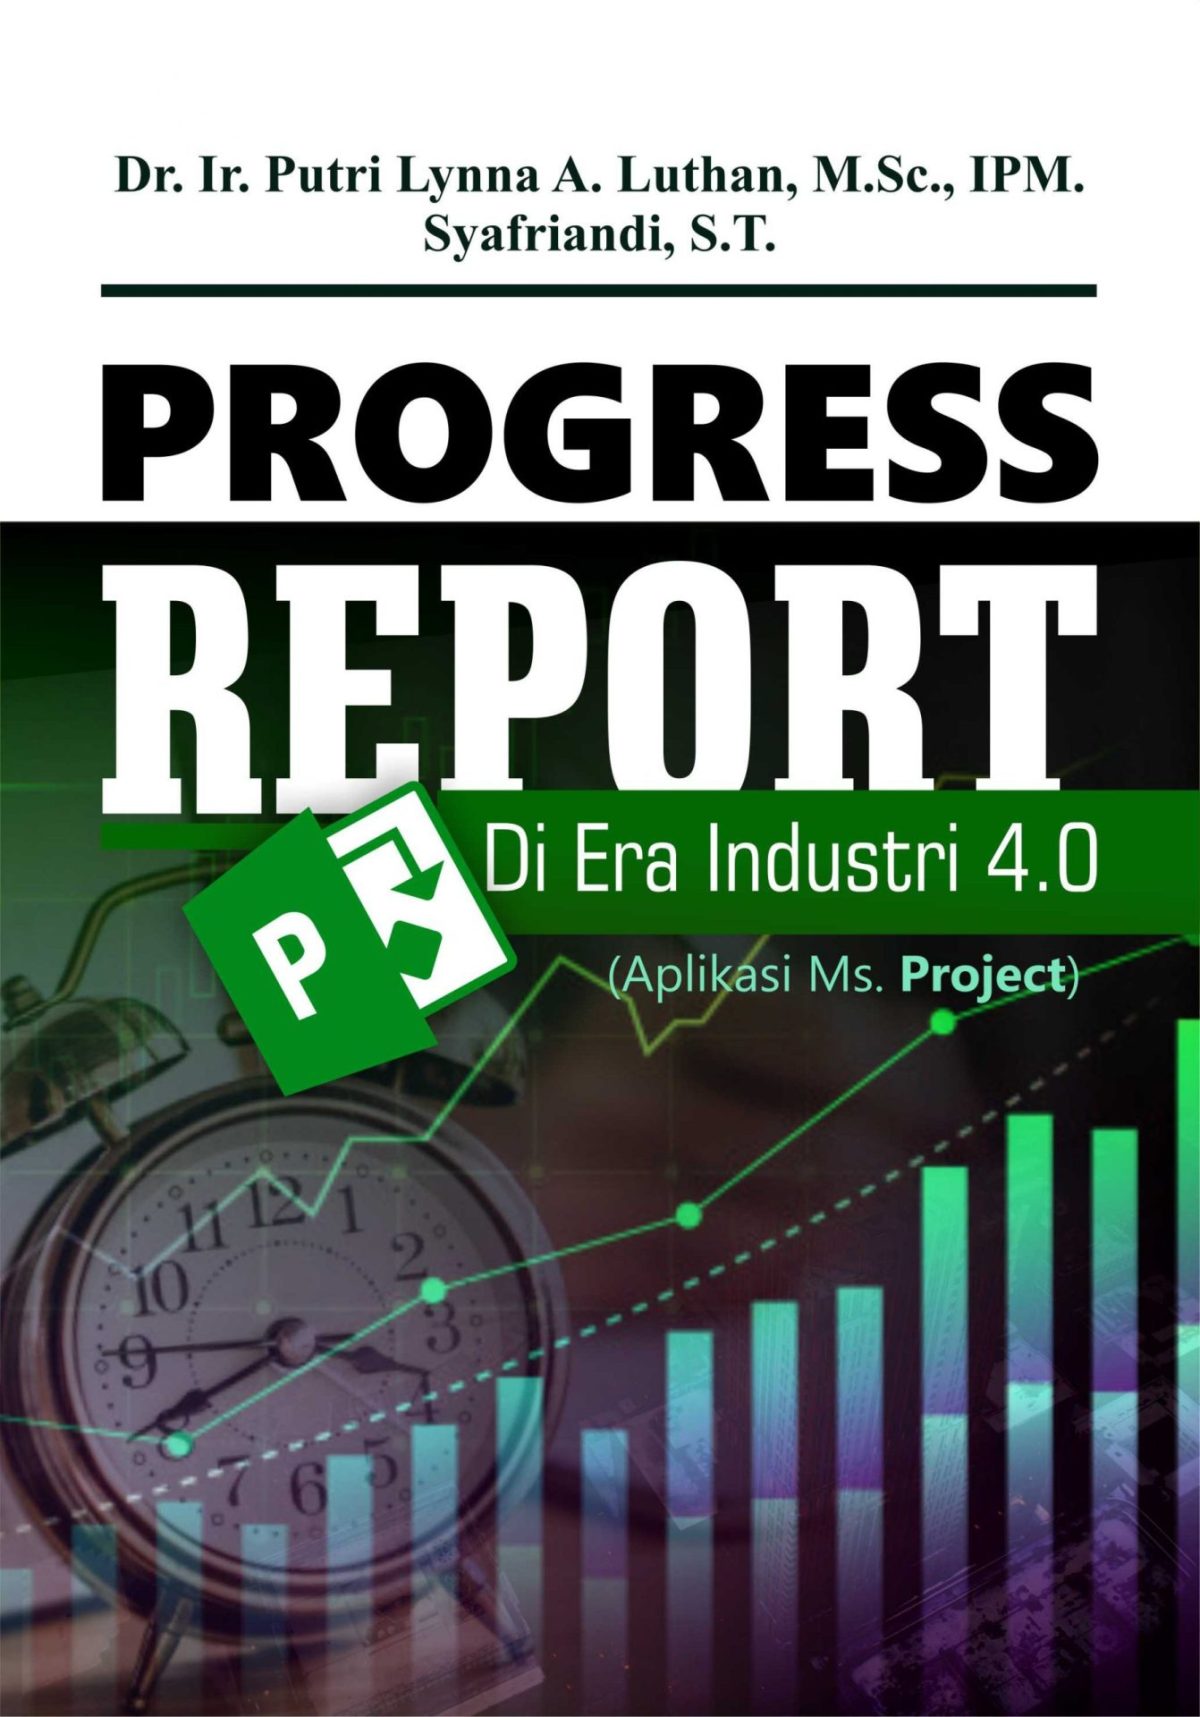 Progress Report Di Era Industri 4.0